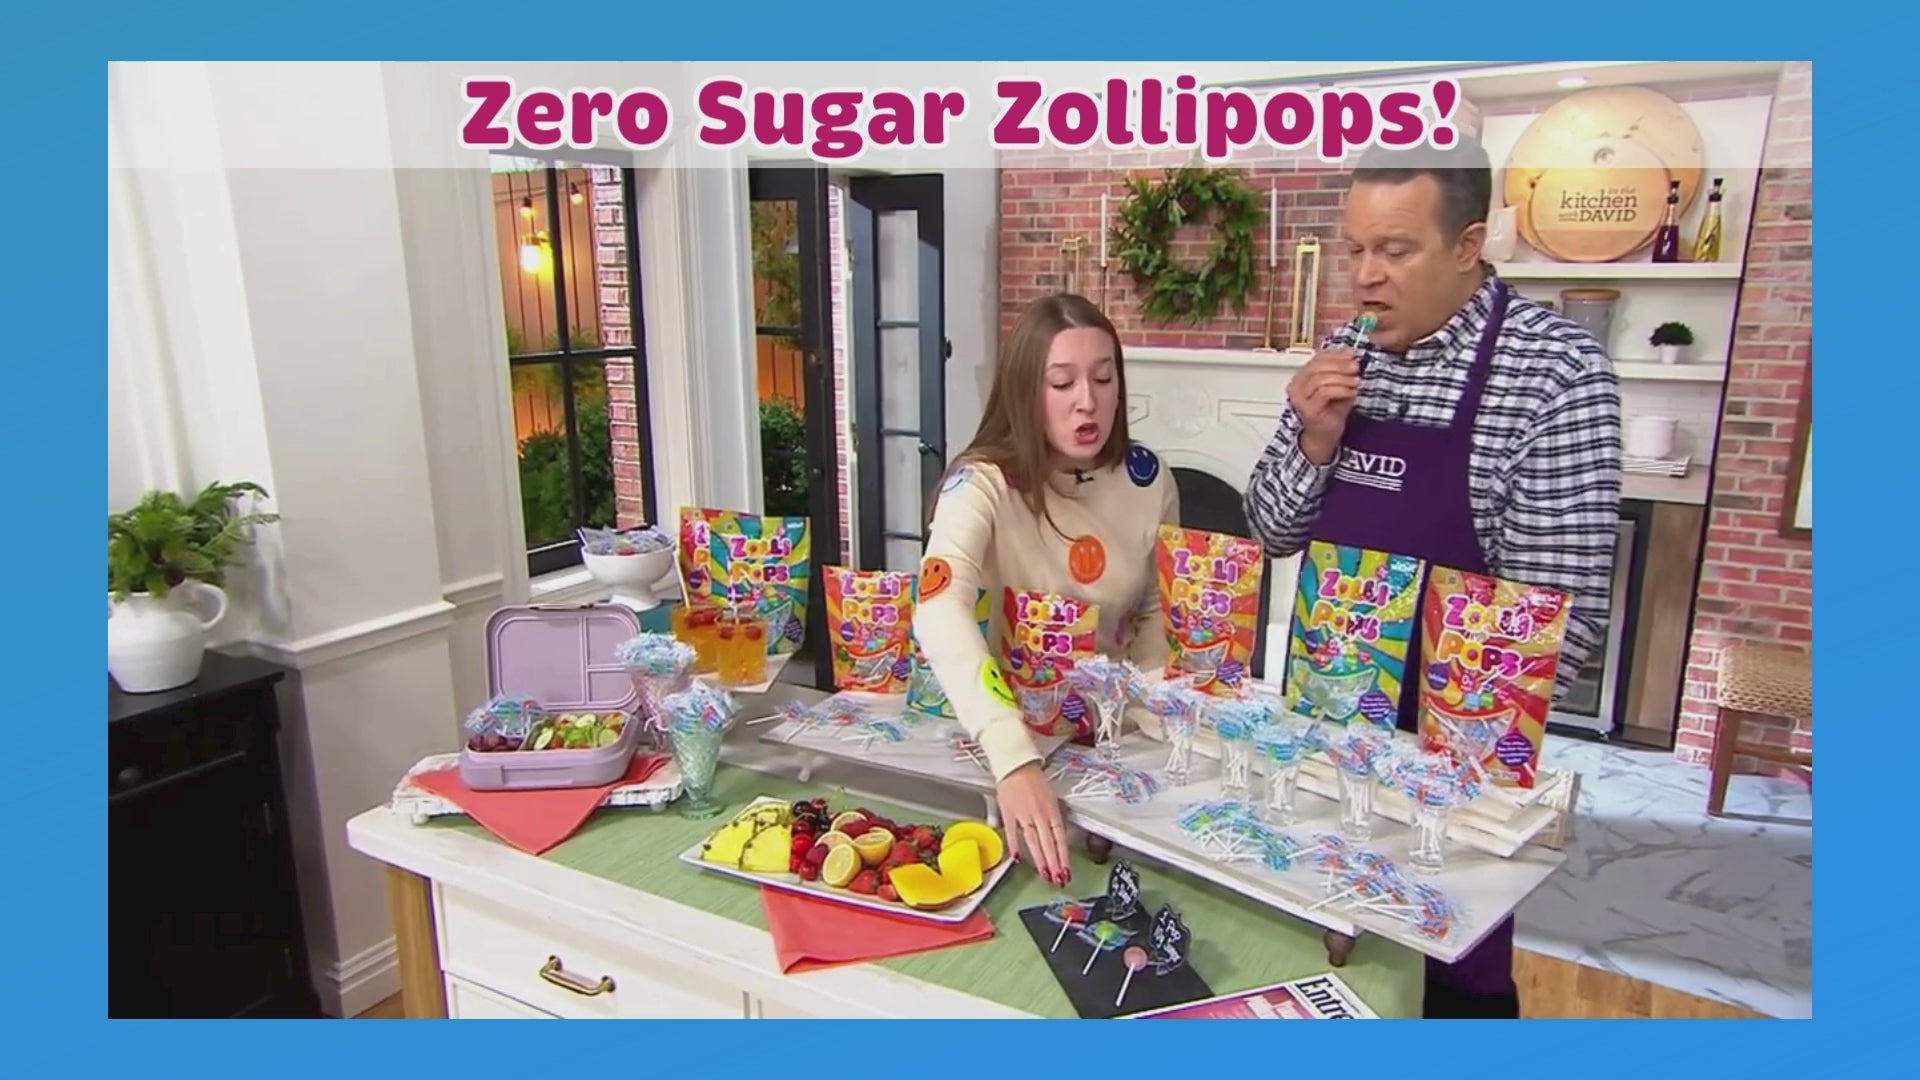 Zollipops have 0 grams of Sugar